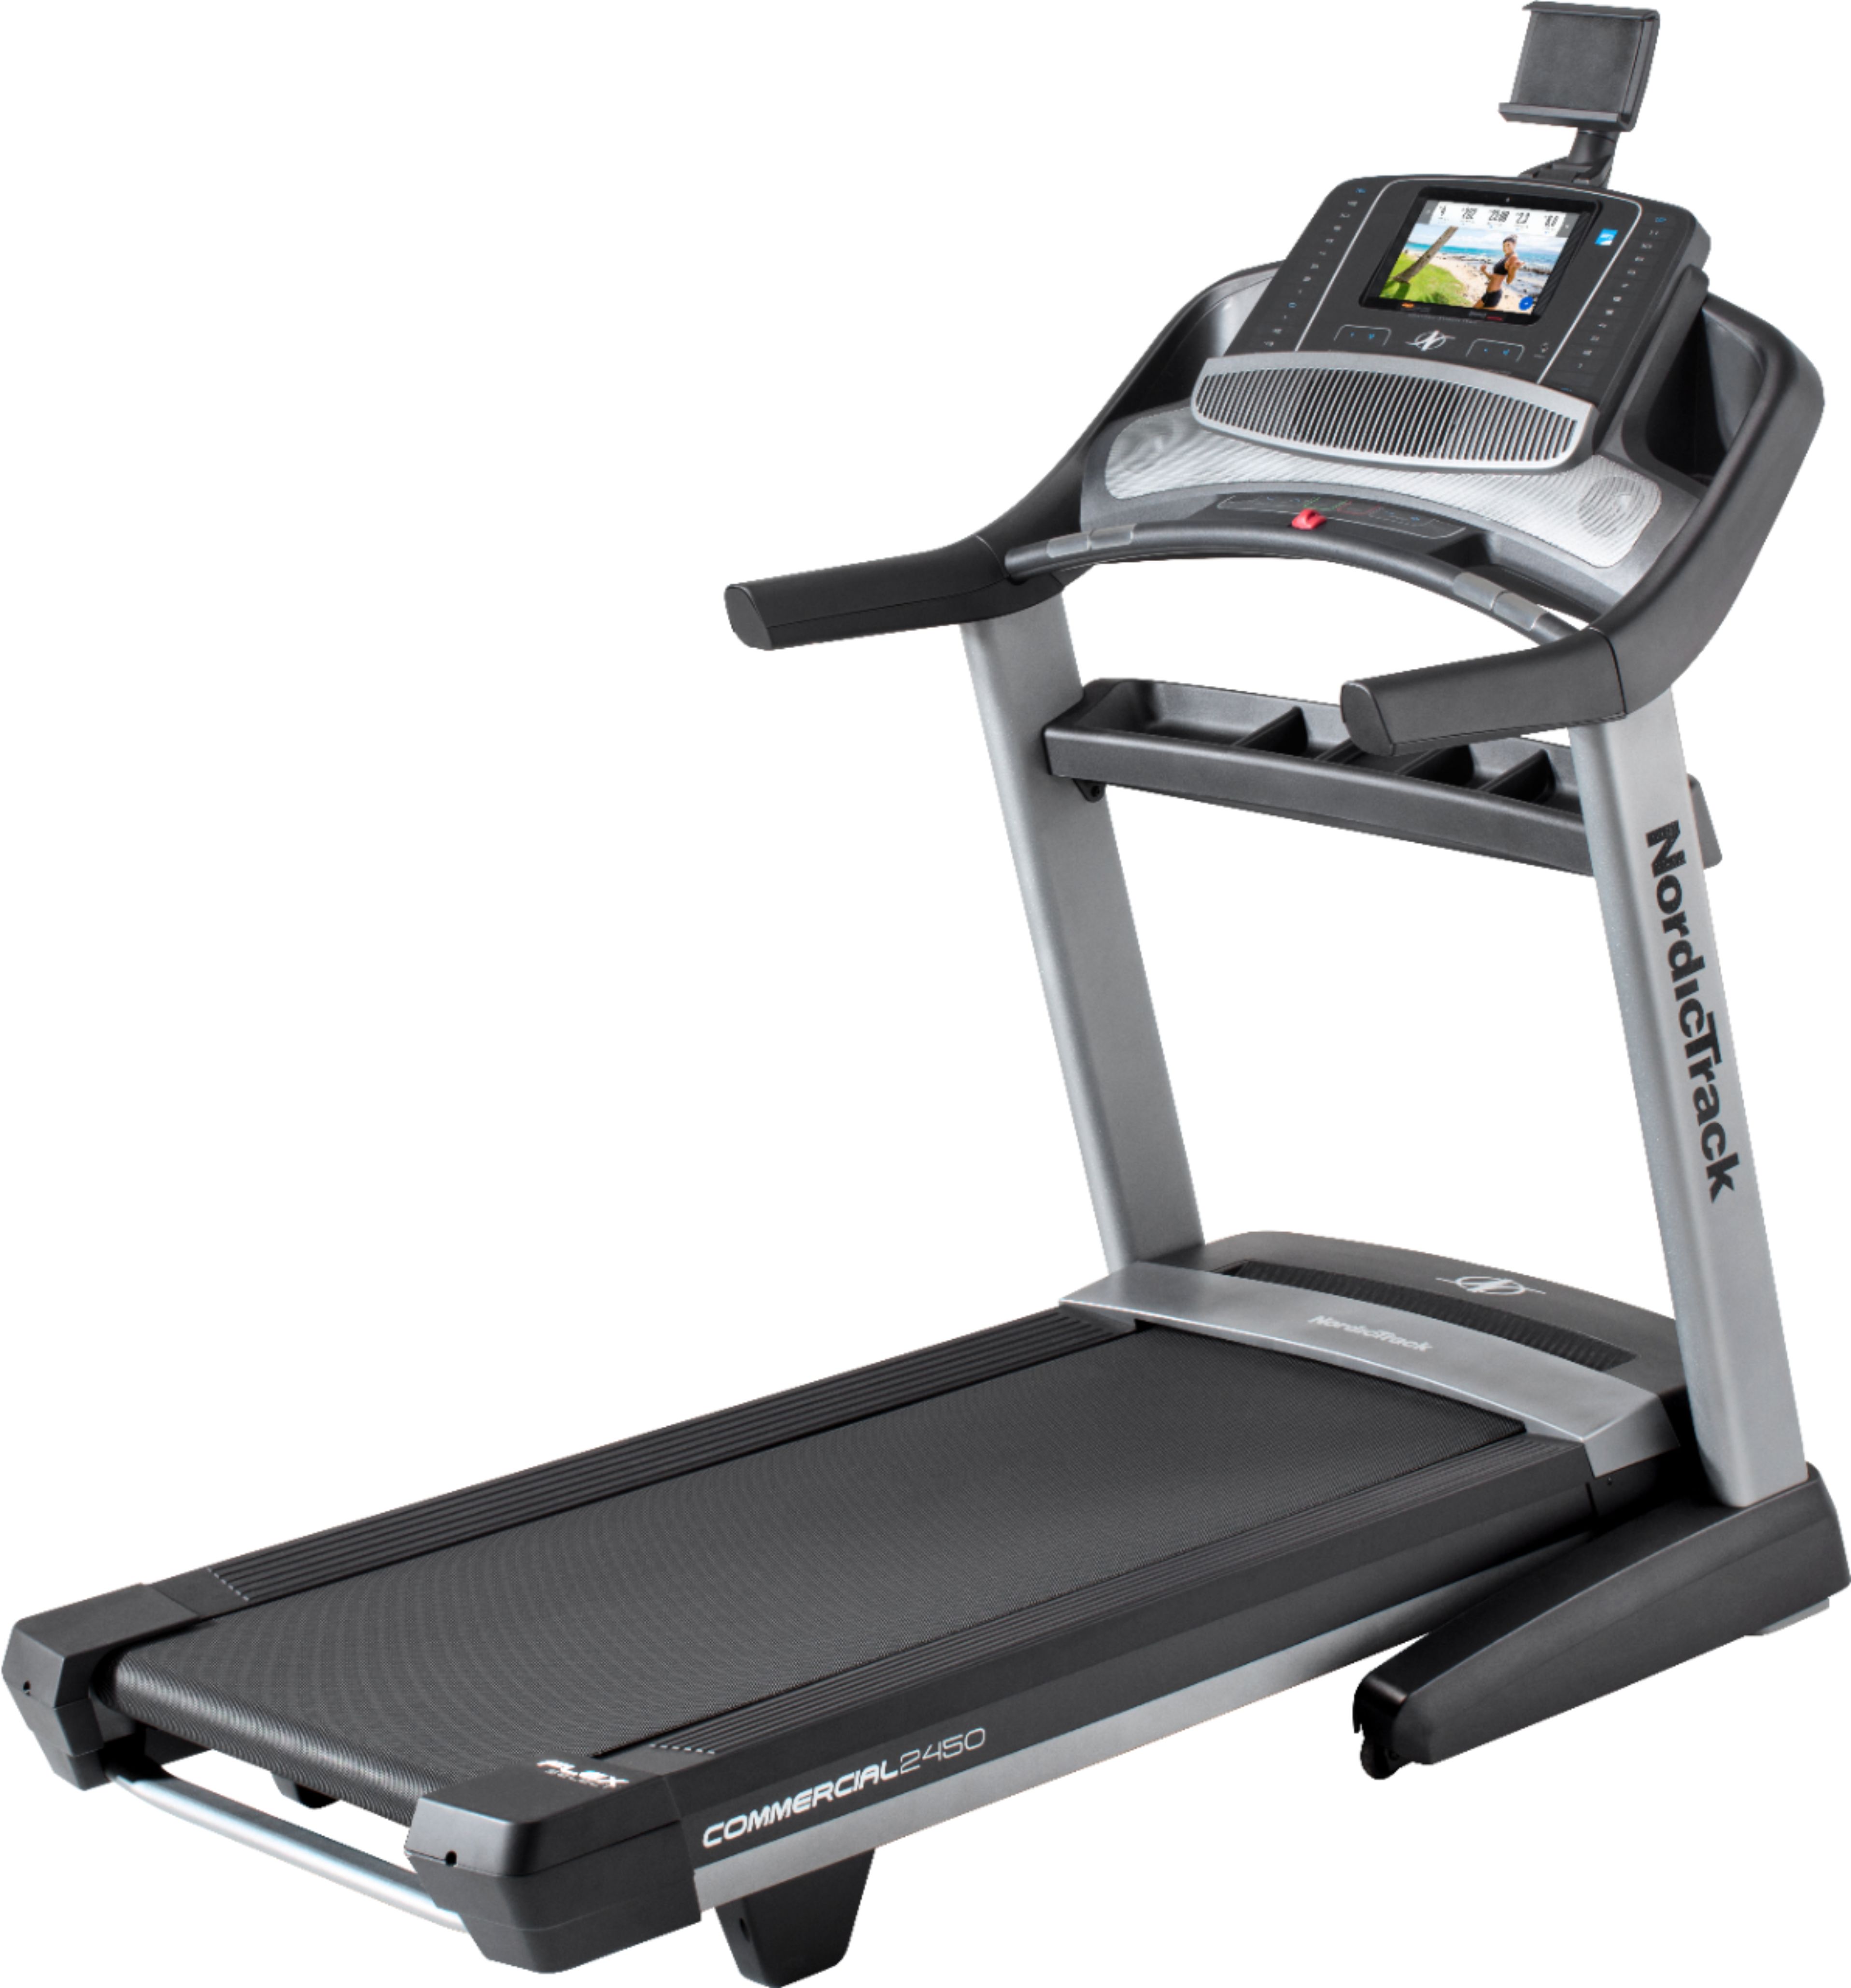 NordicTrack Commercial 2450 Treadmill Black NTL17216 - Best Buy